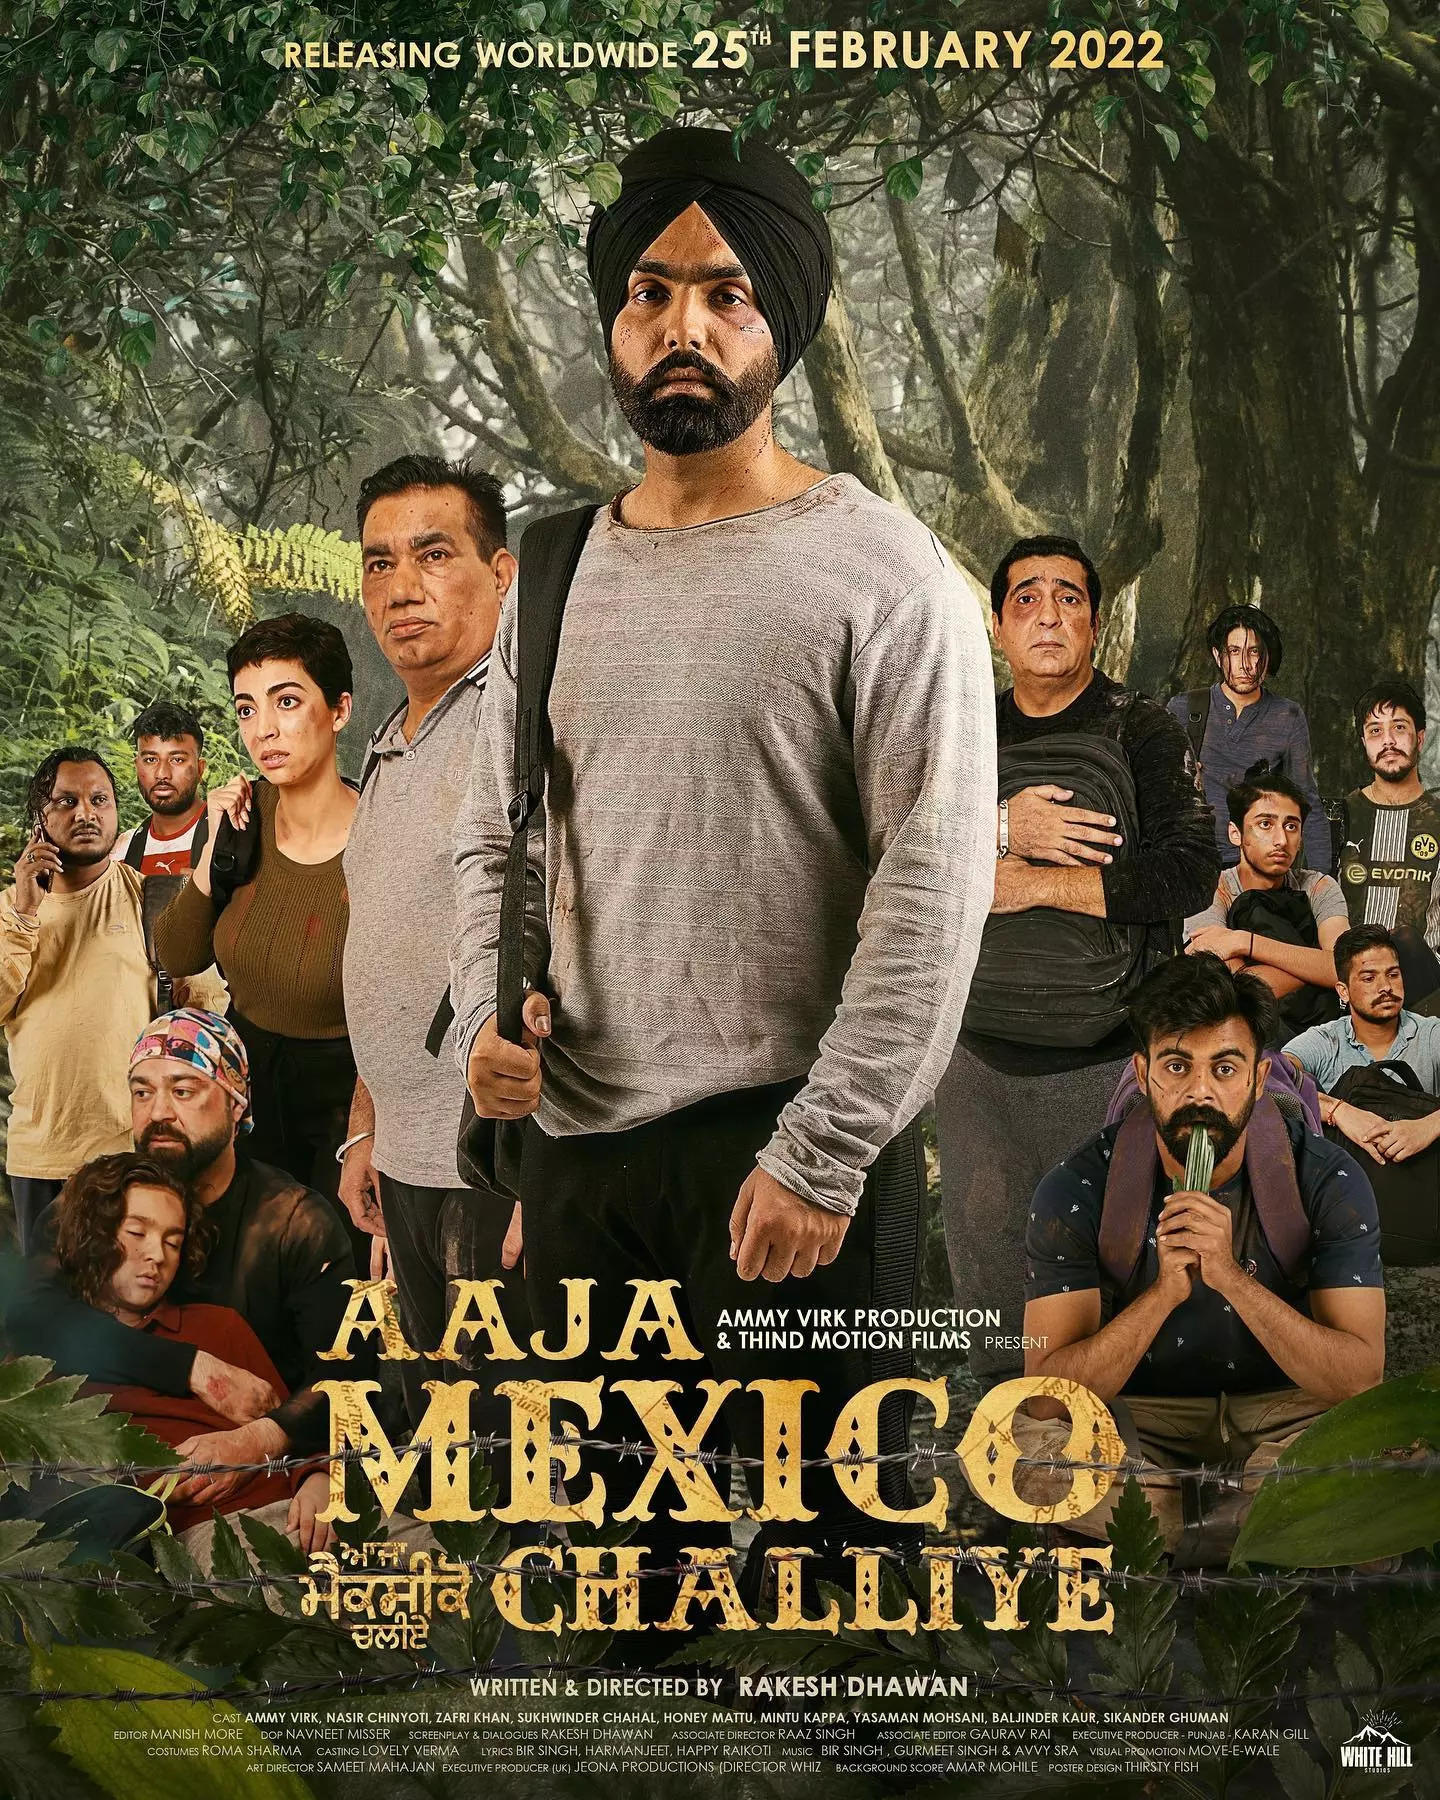 ammy virk: Ammy Virk’s ‘Aaja Mexico Challiye’ to release on February 25 | Punjabi Movie News